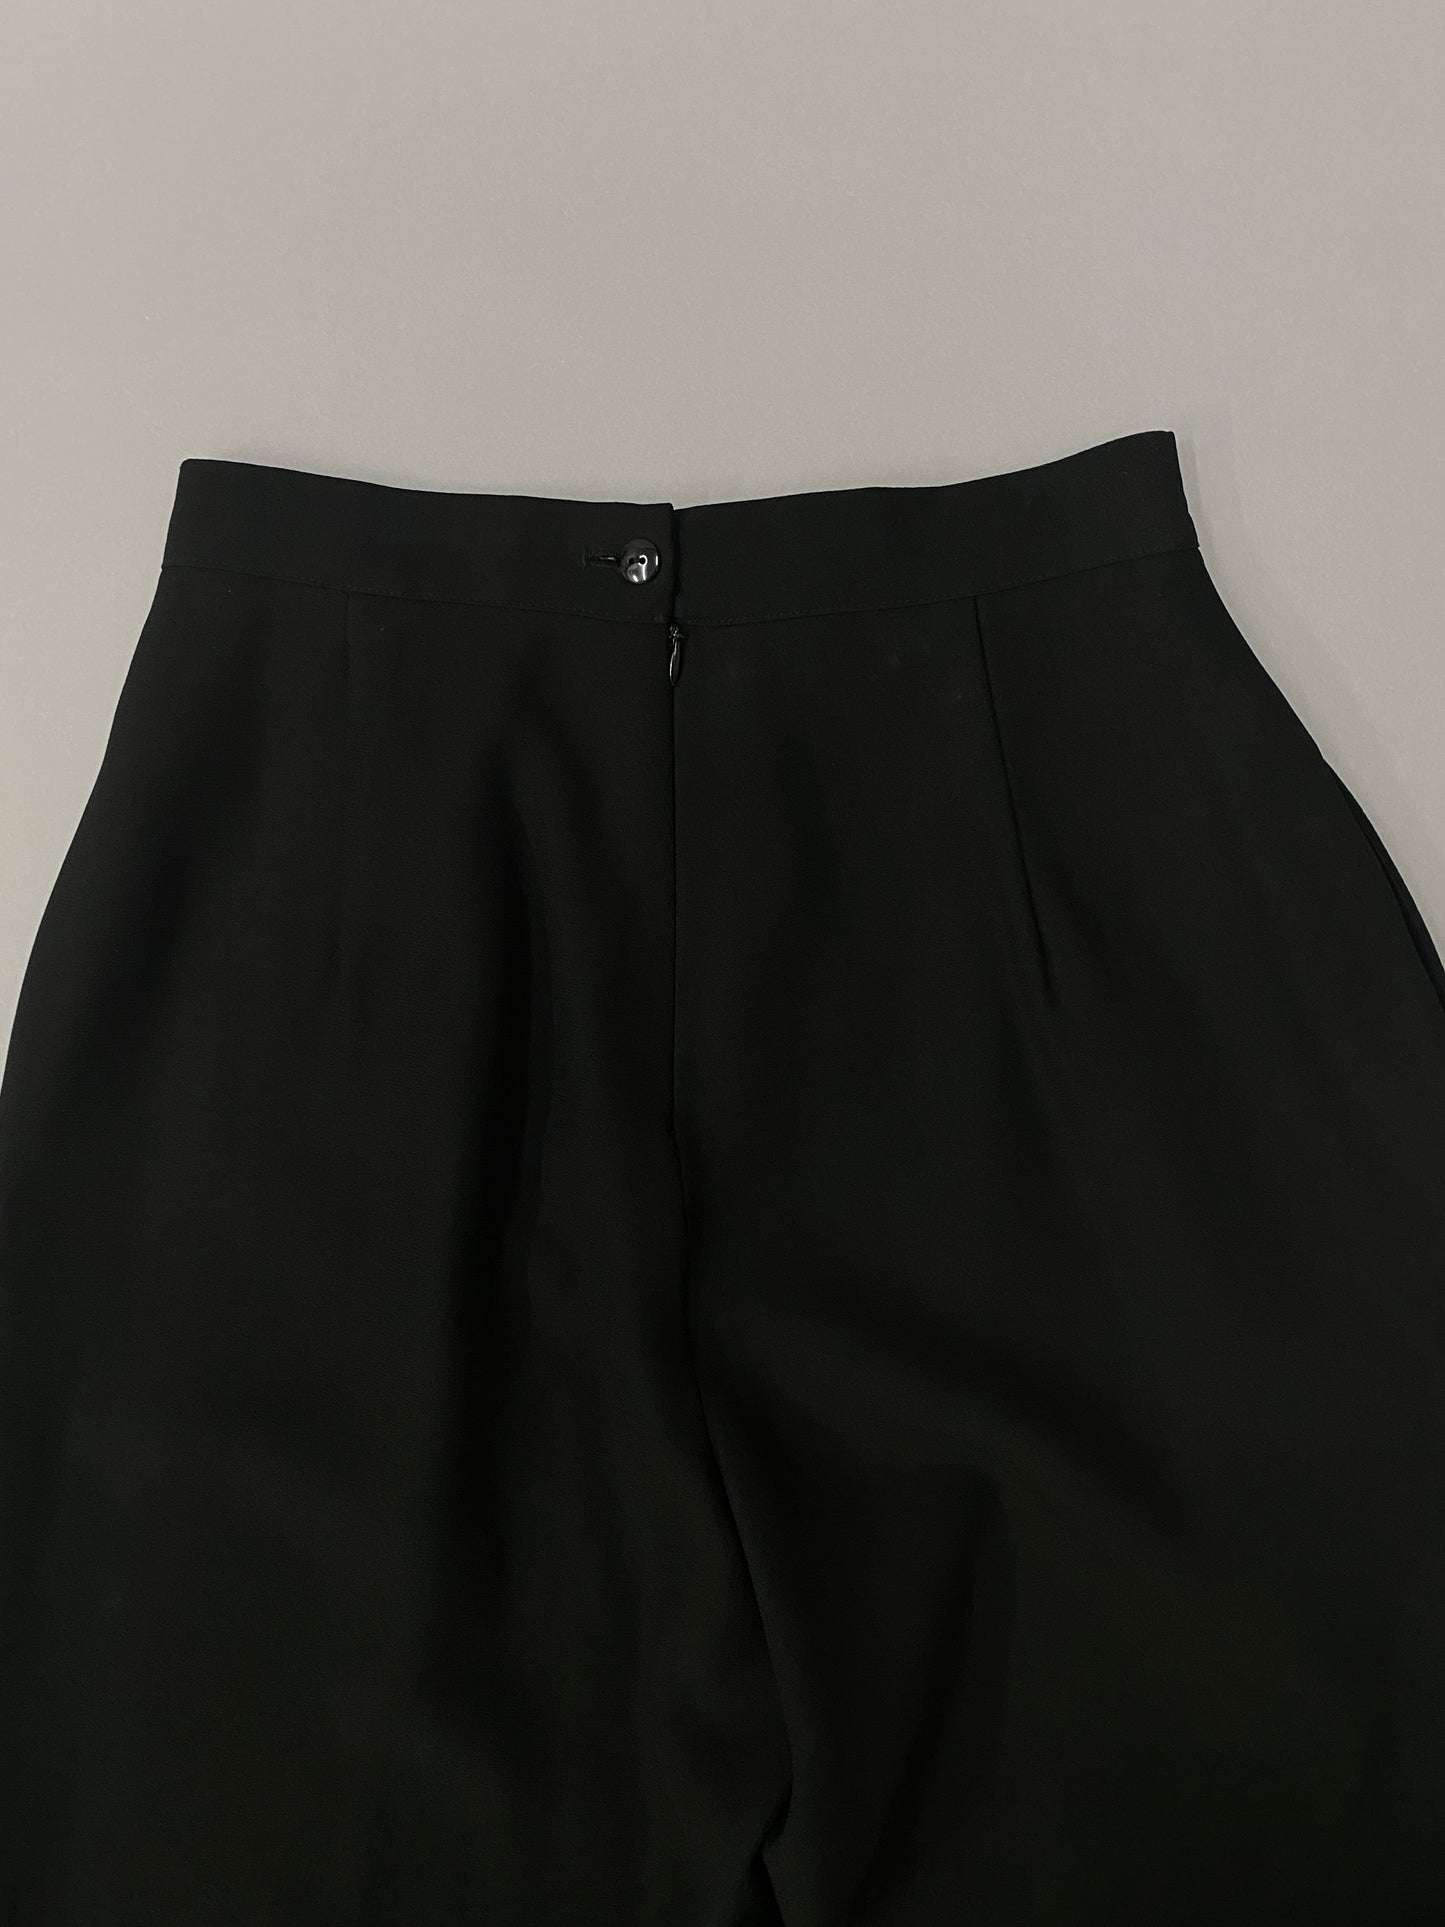 Pantalón Negro 80's - 10